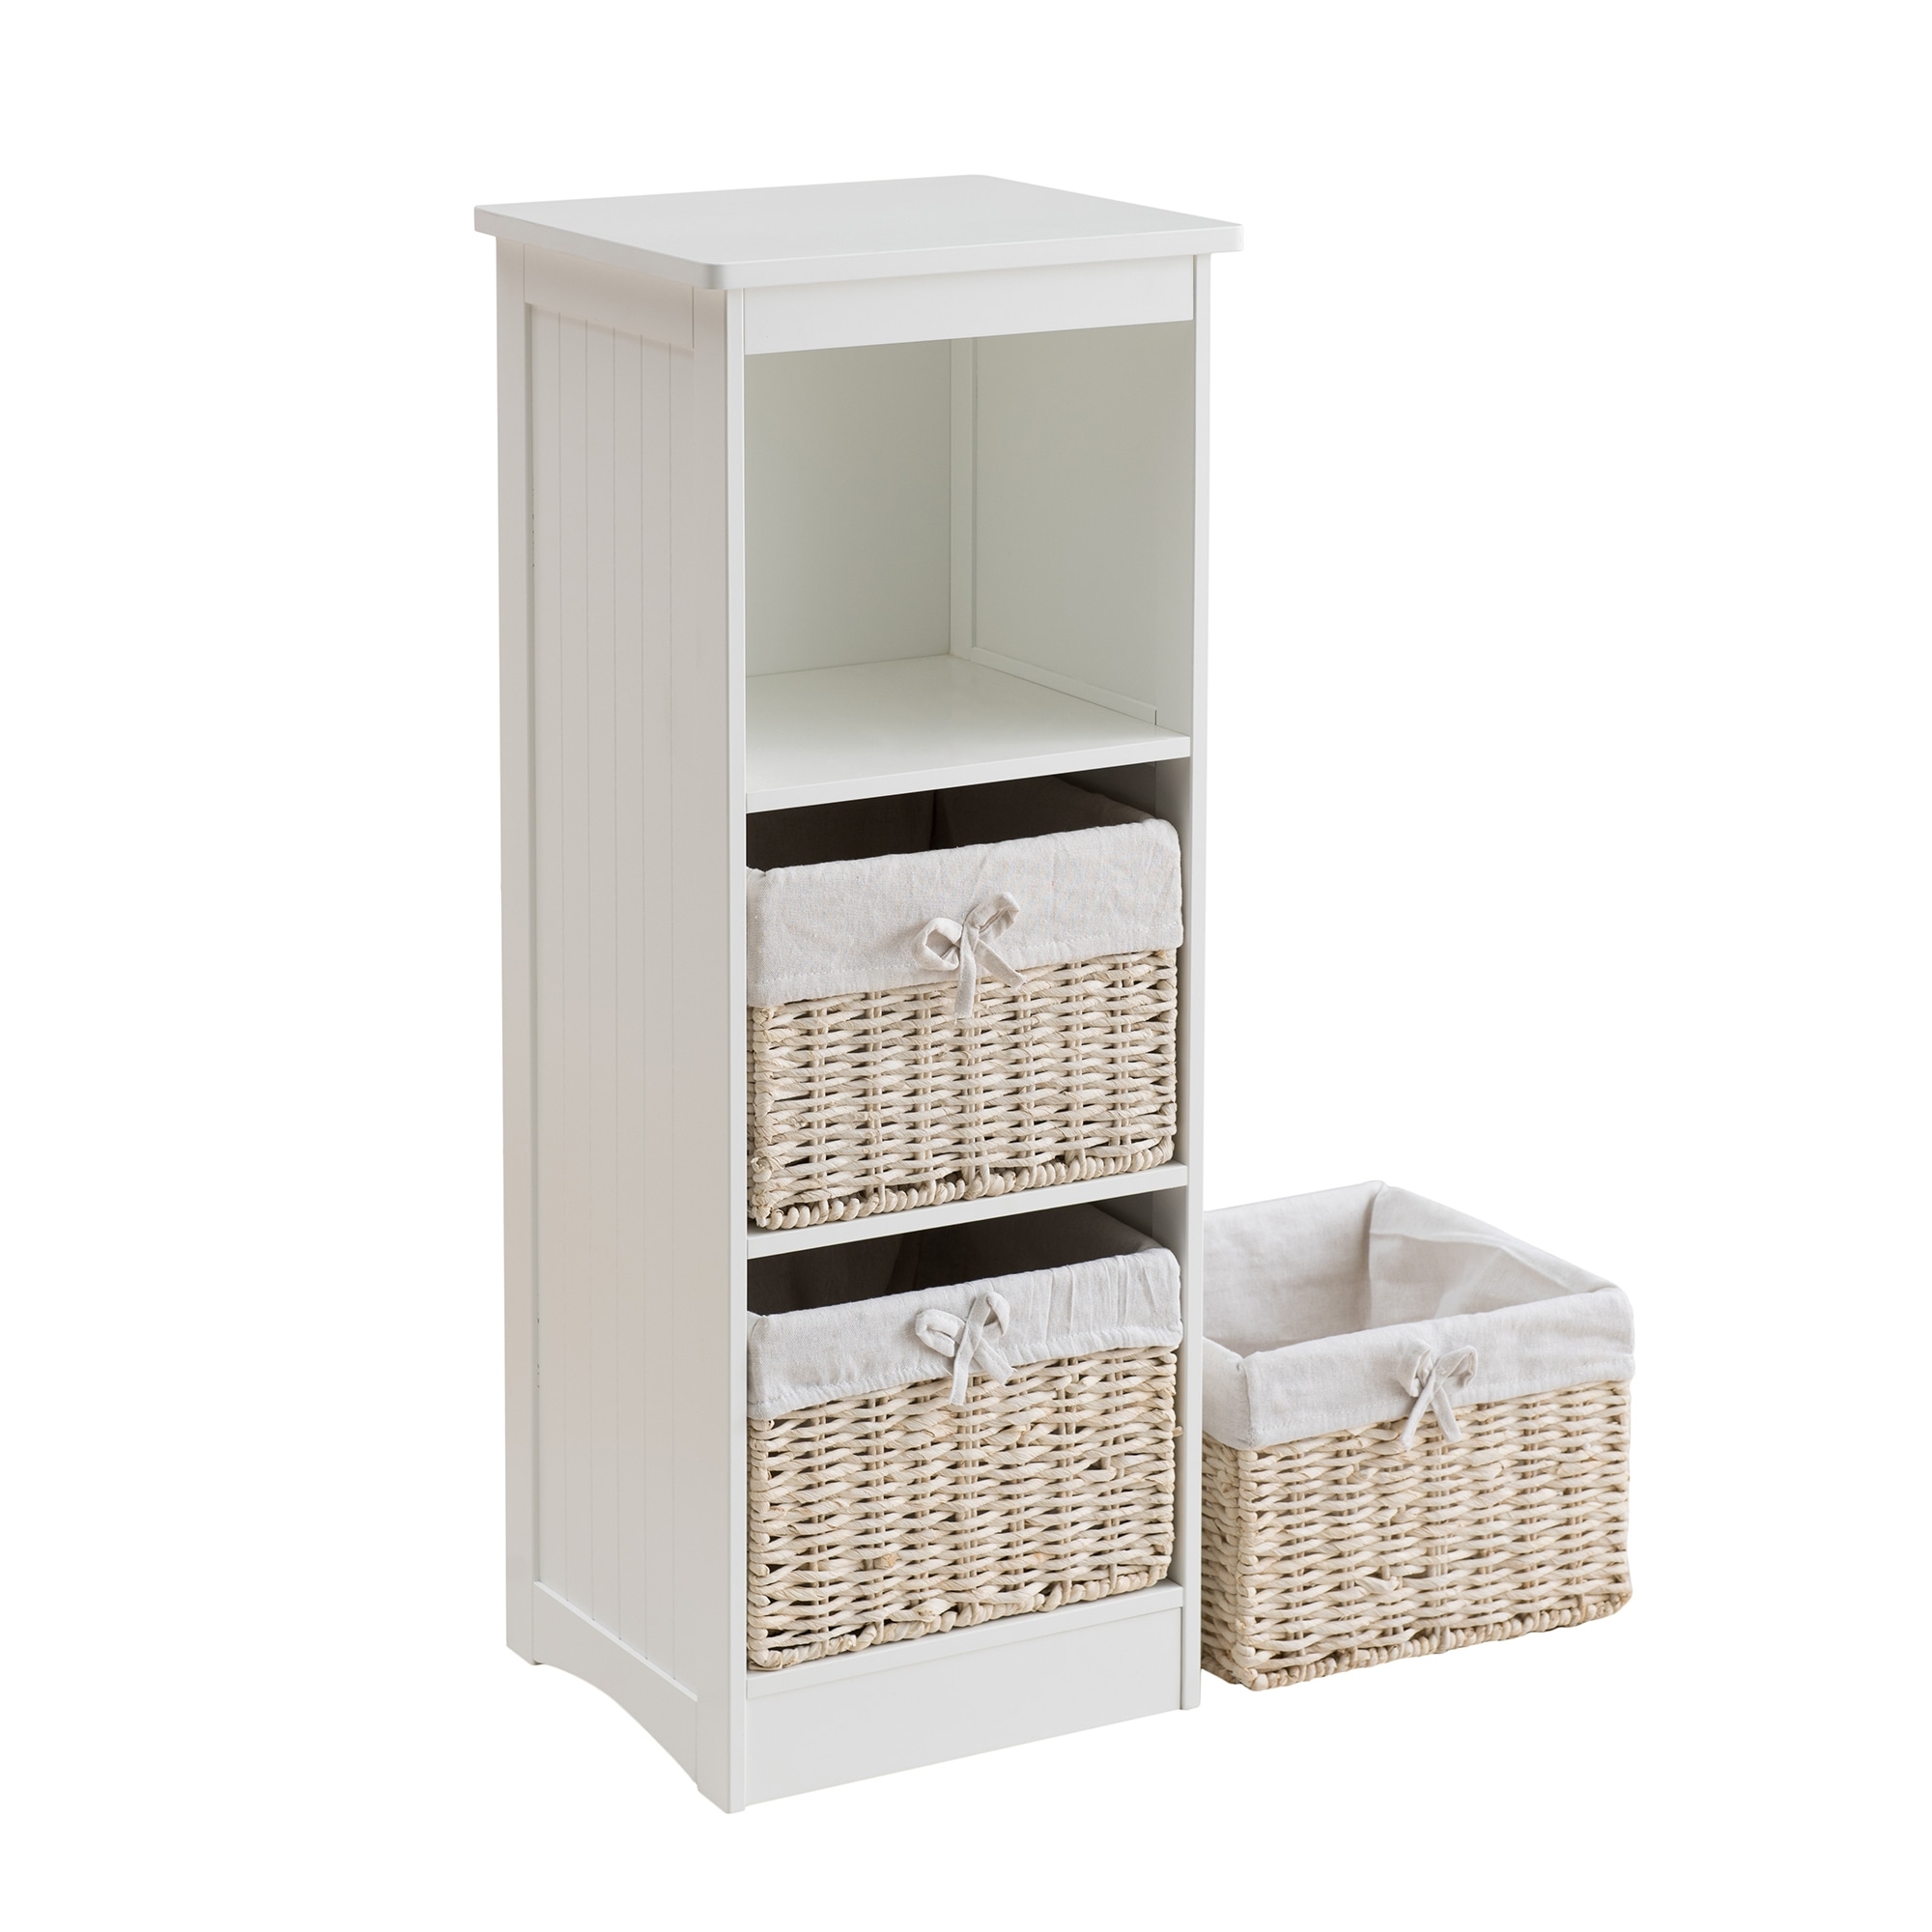 white wicker storage baskets shelves